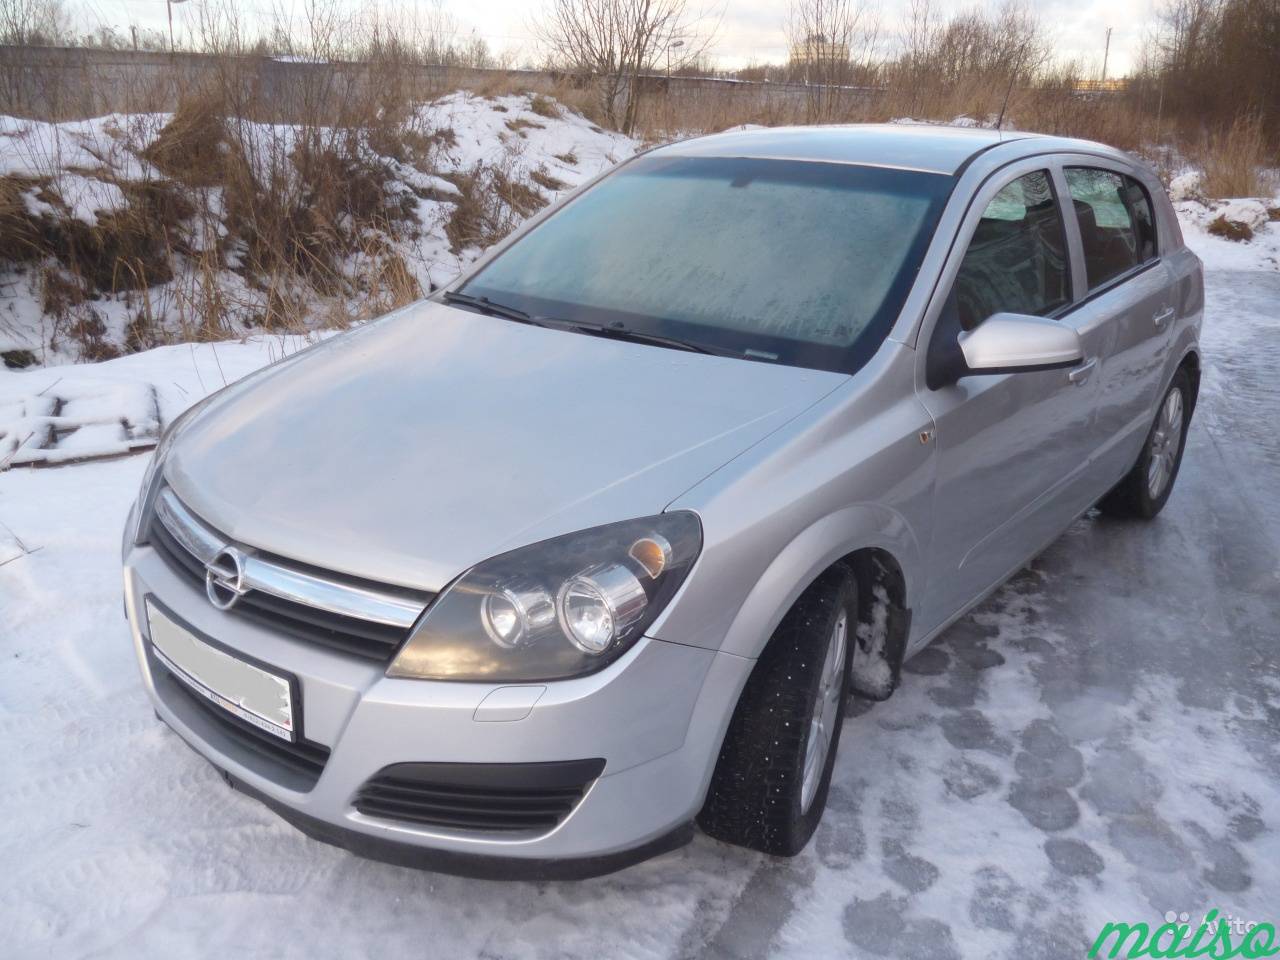 Разбираю Opel Astra H Опель Астра Ш седан, хетчбе в Санкт-Петербурге. Фото 1